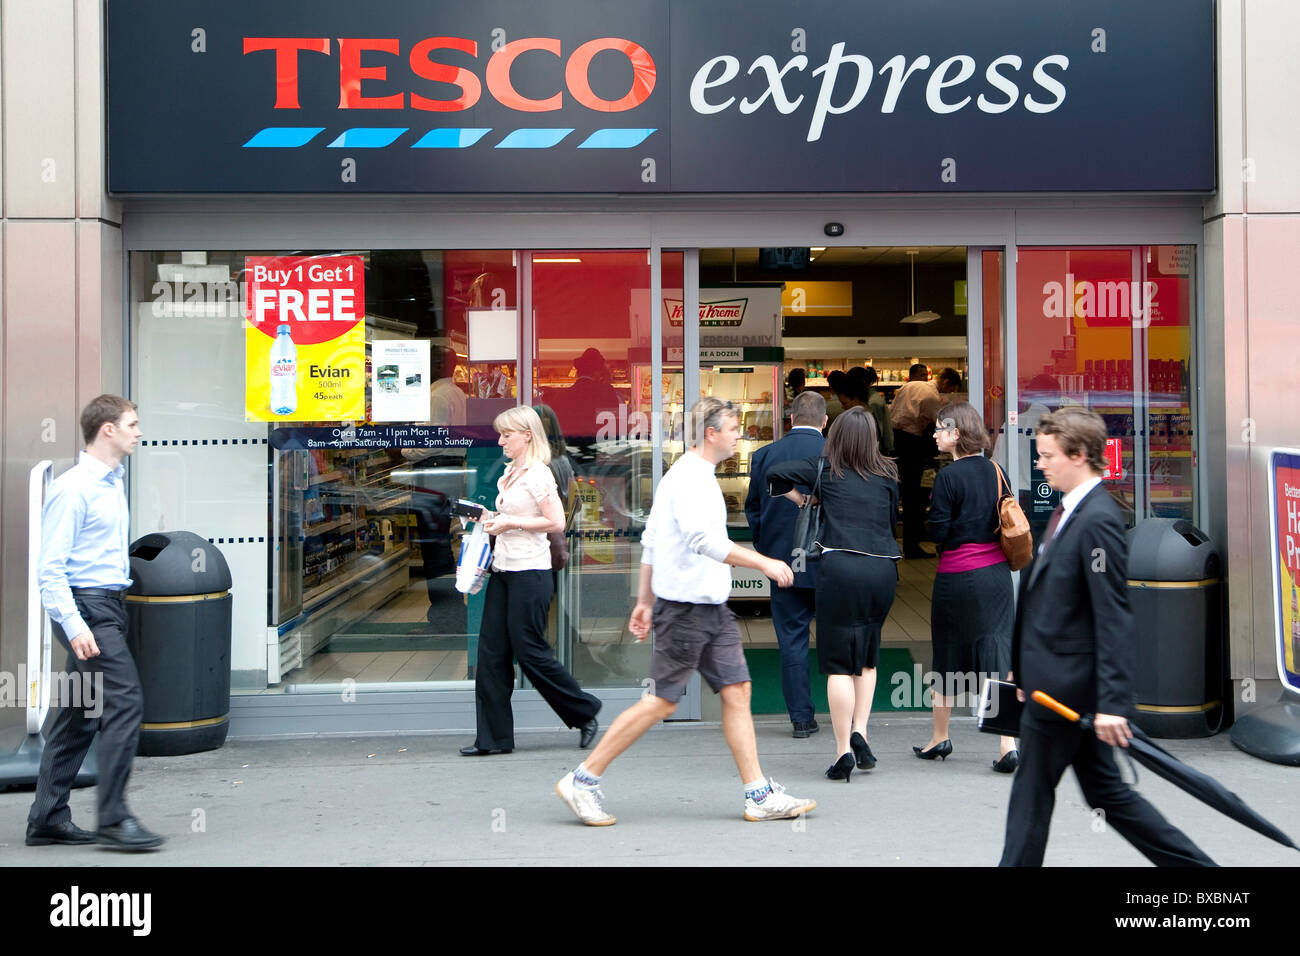 Store of the supermarket chain Tesco, Tesco Express, London, England, United Kingdom, Europe Stock Photo